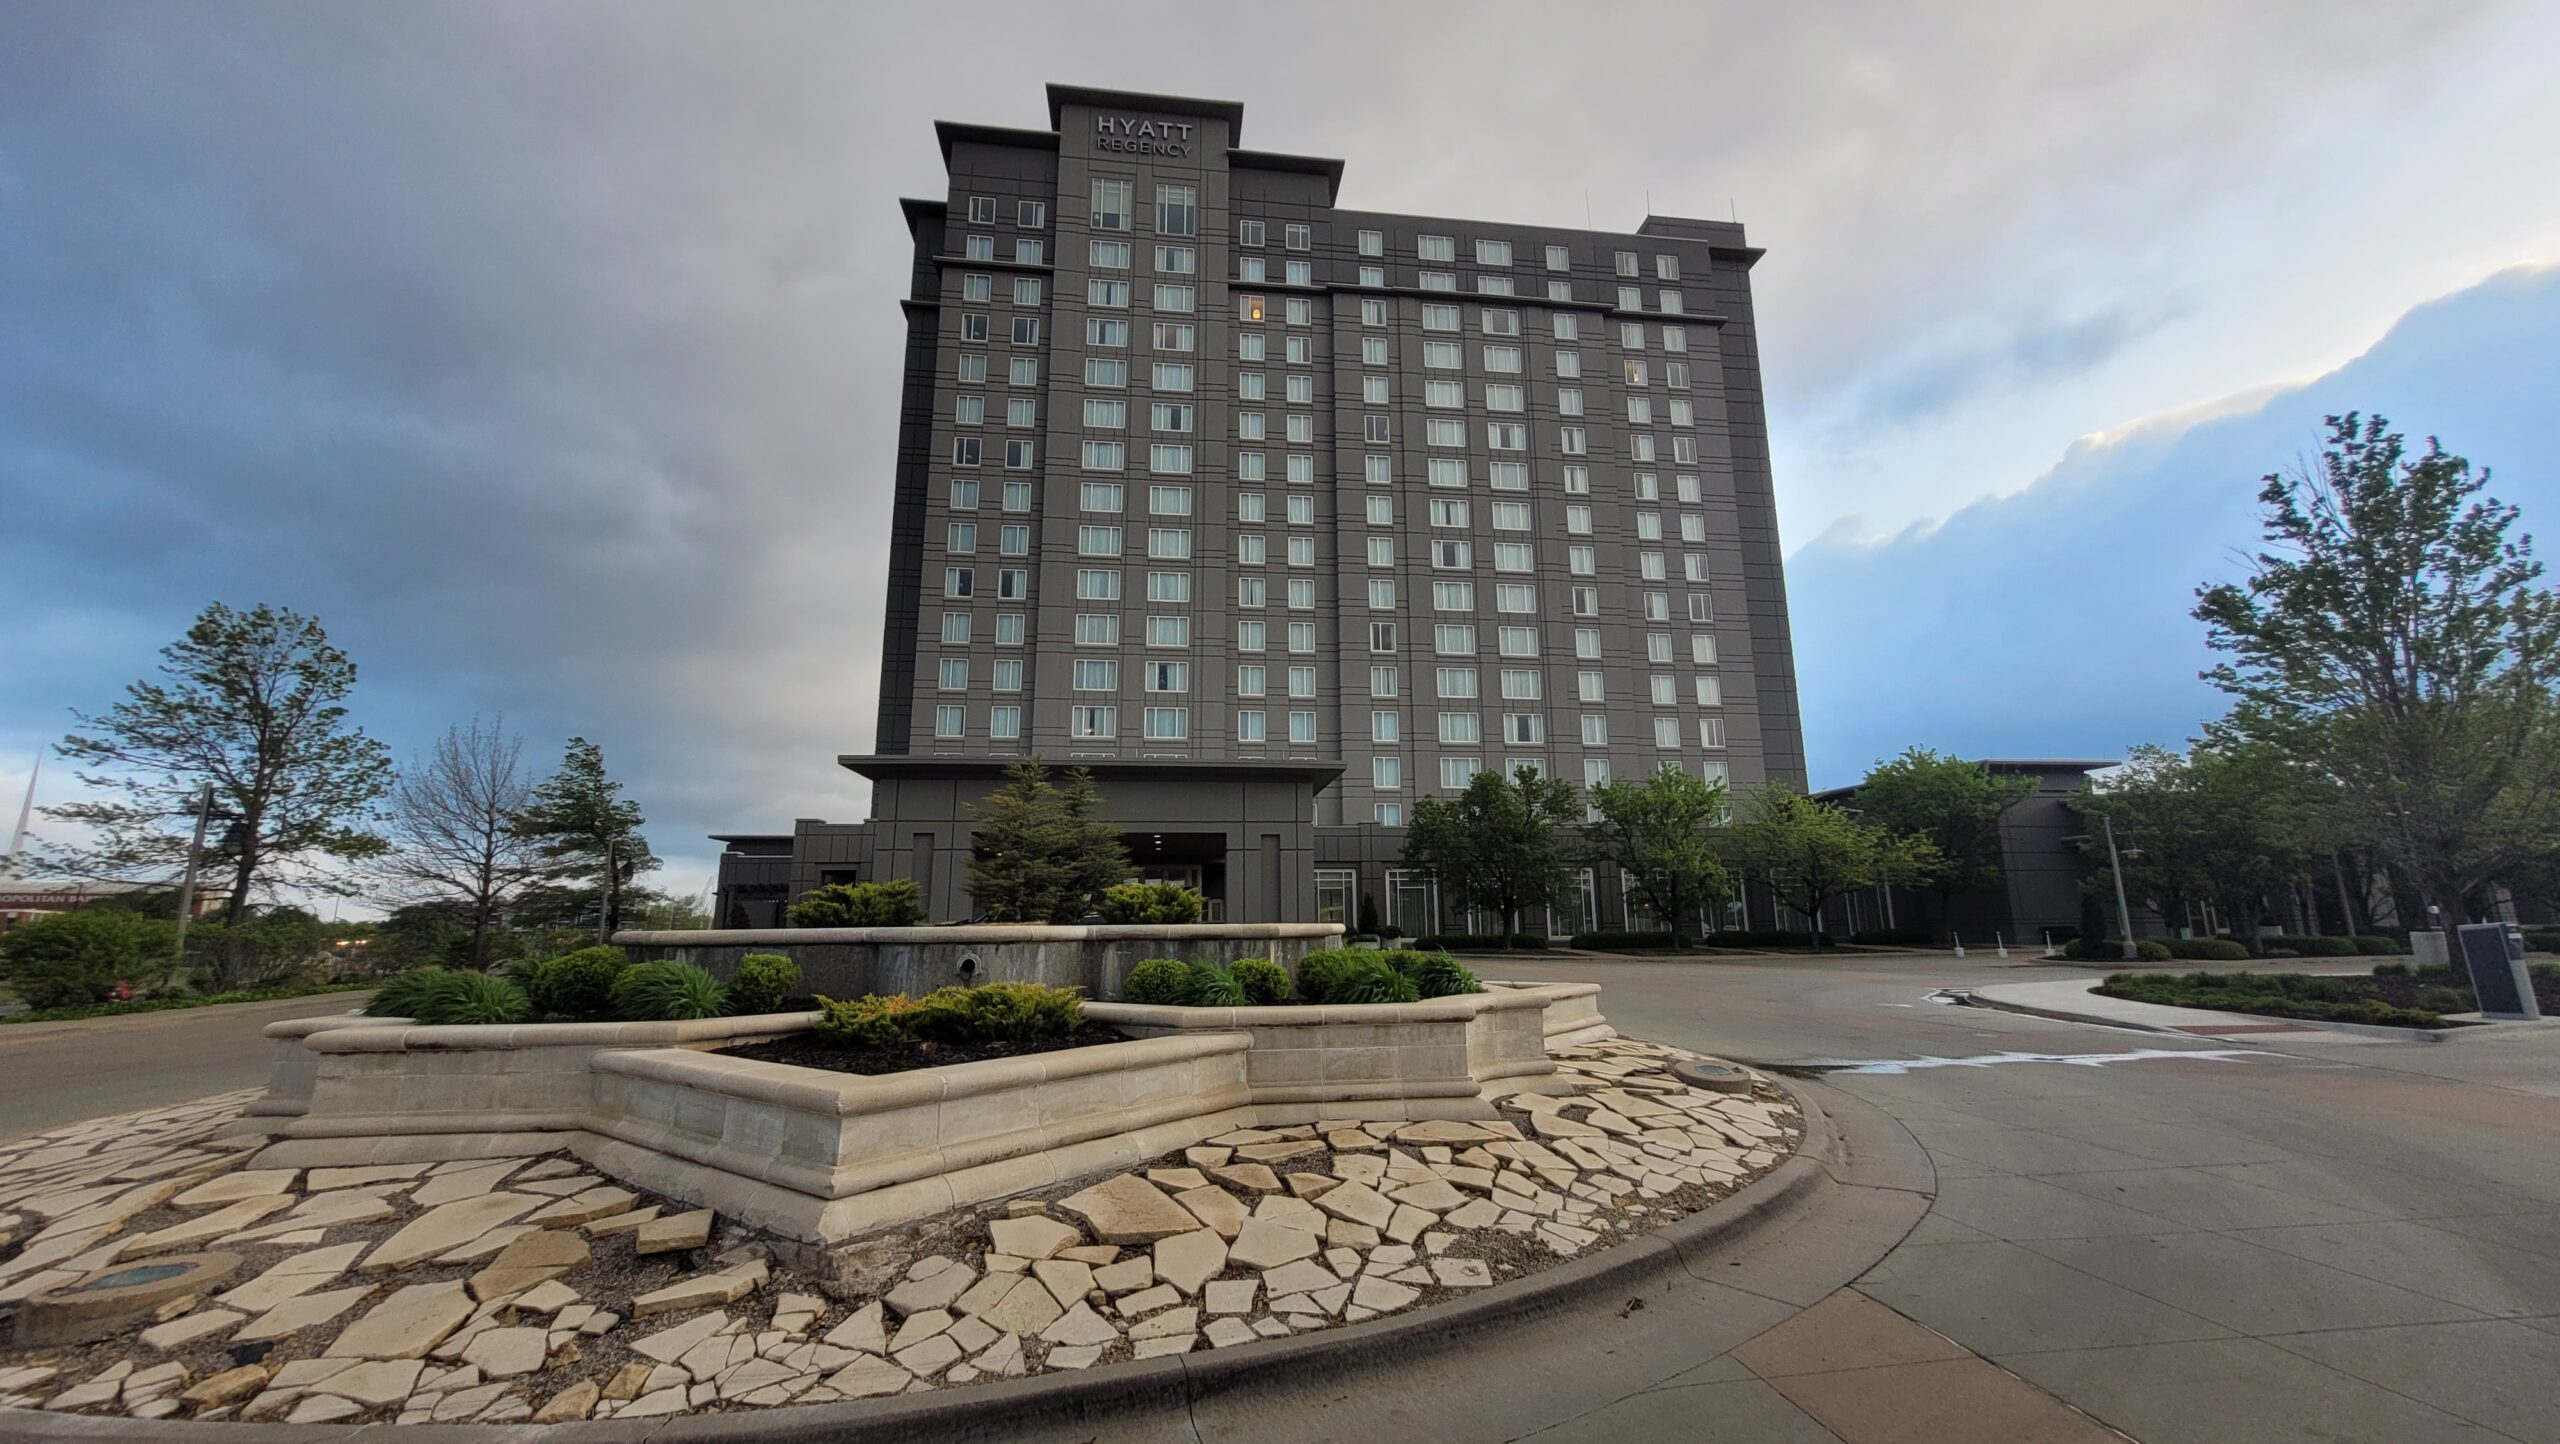 Hyatt Regency Wichita Review – Business Hotel that is a Steal on Points